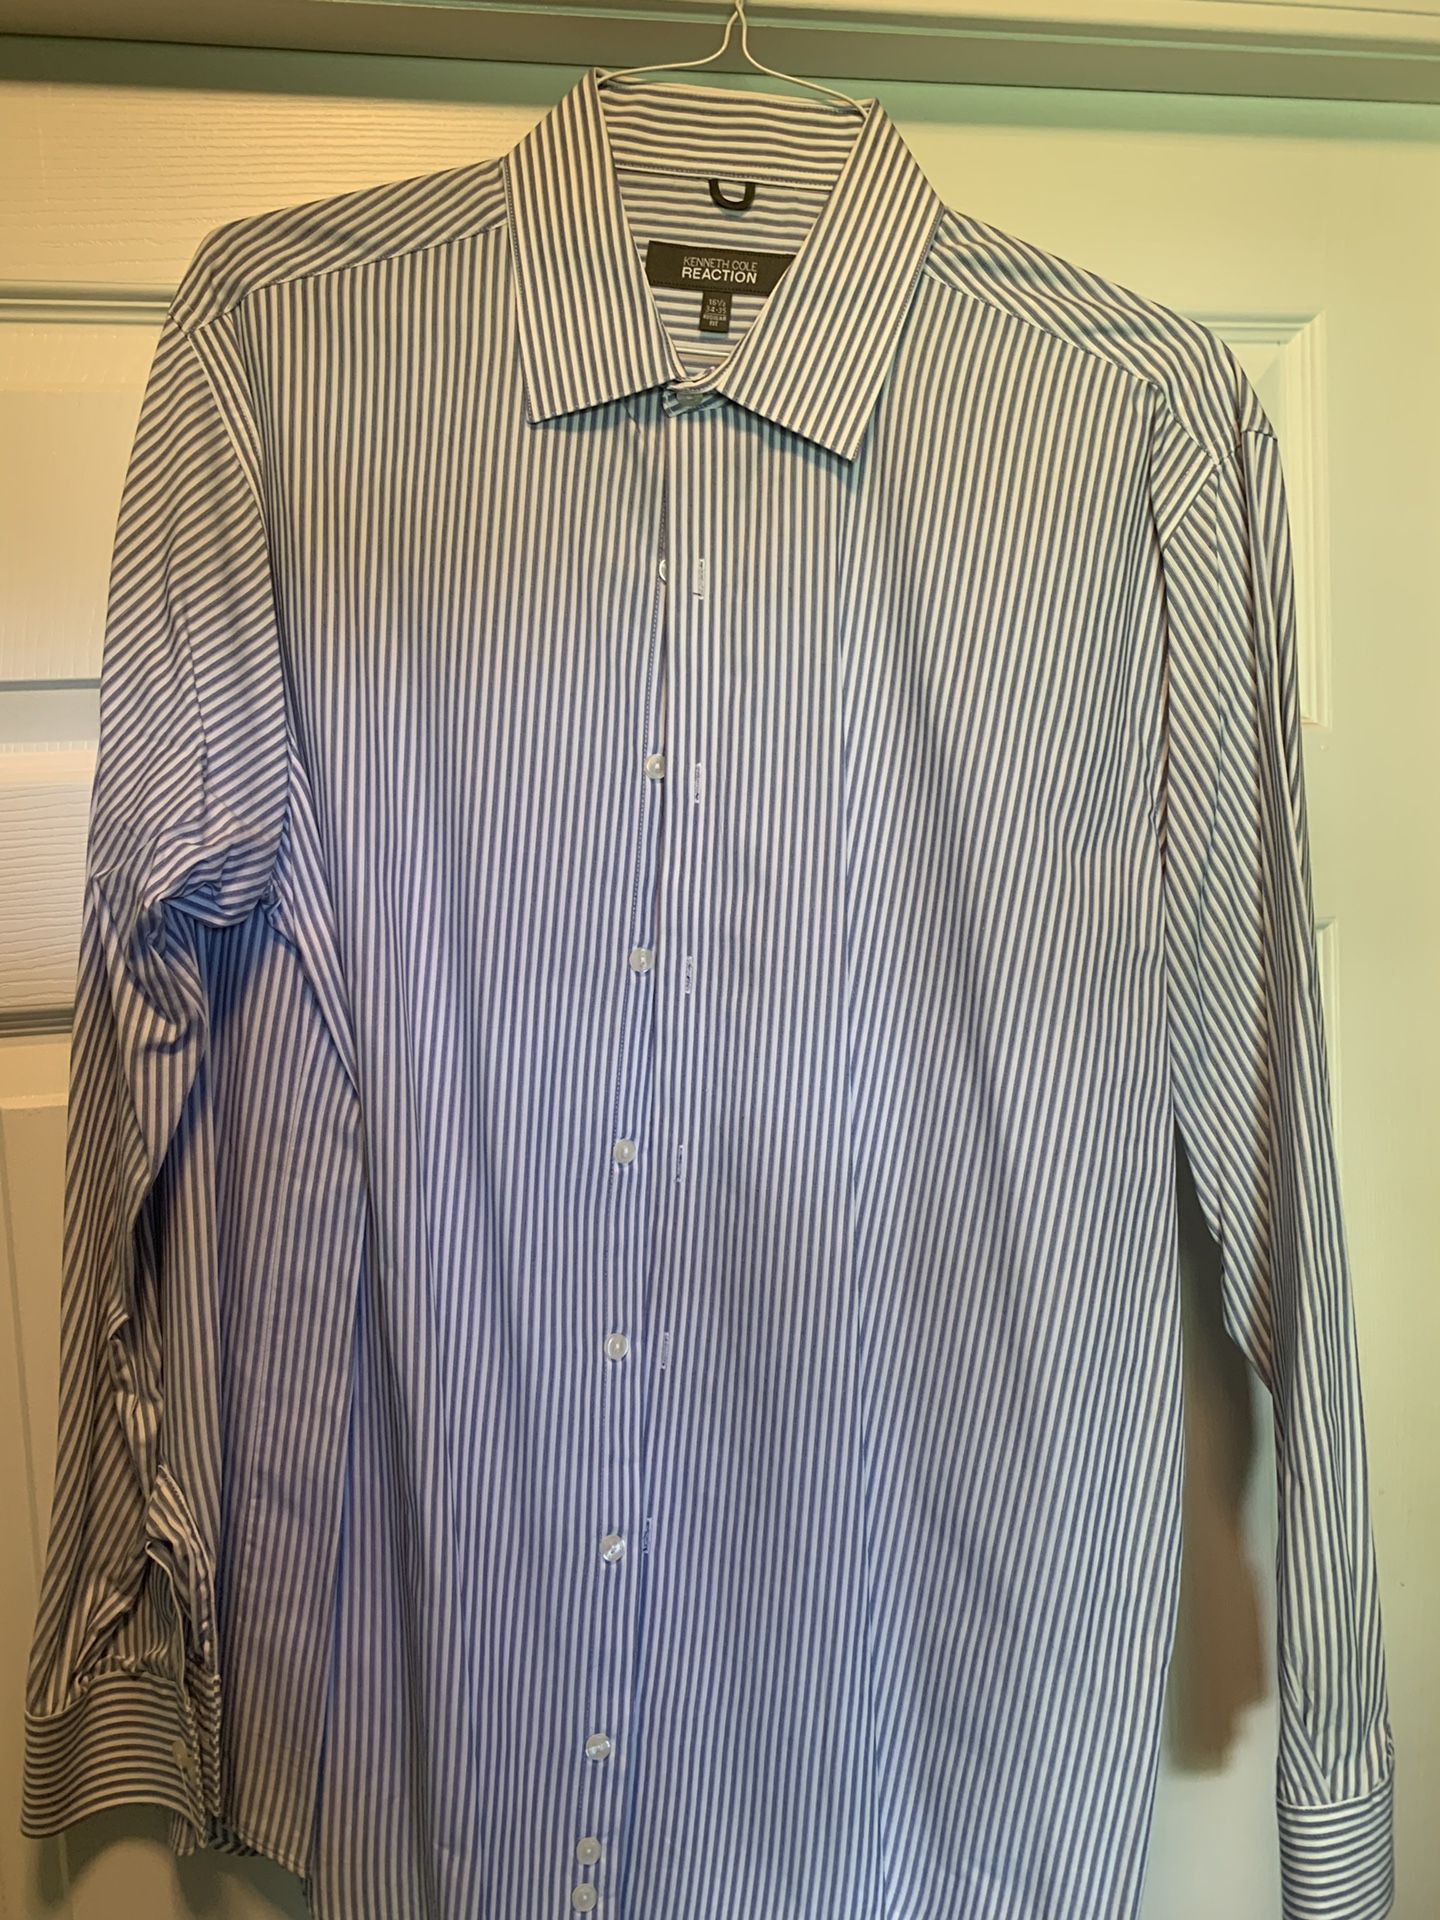 Kenneth Cole long sleeve dress shirt